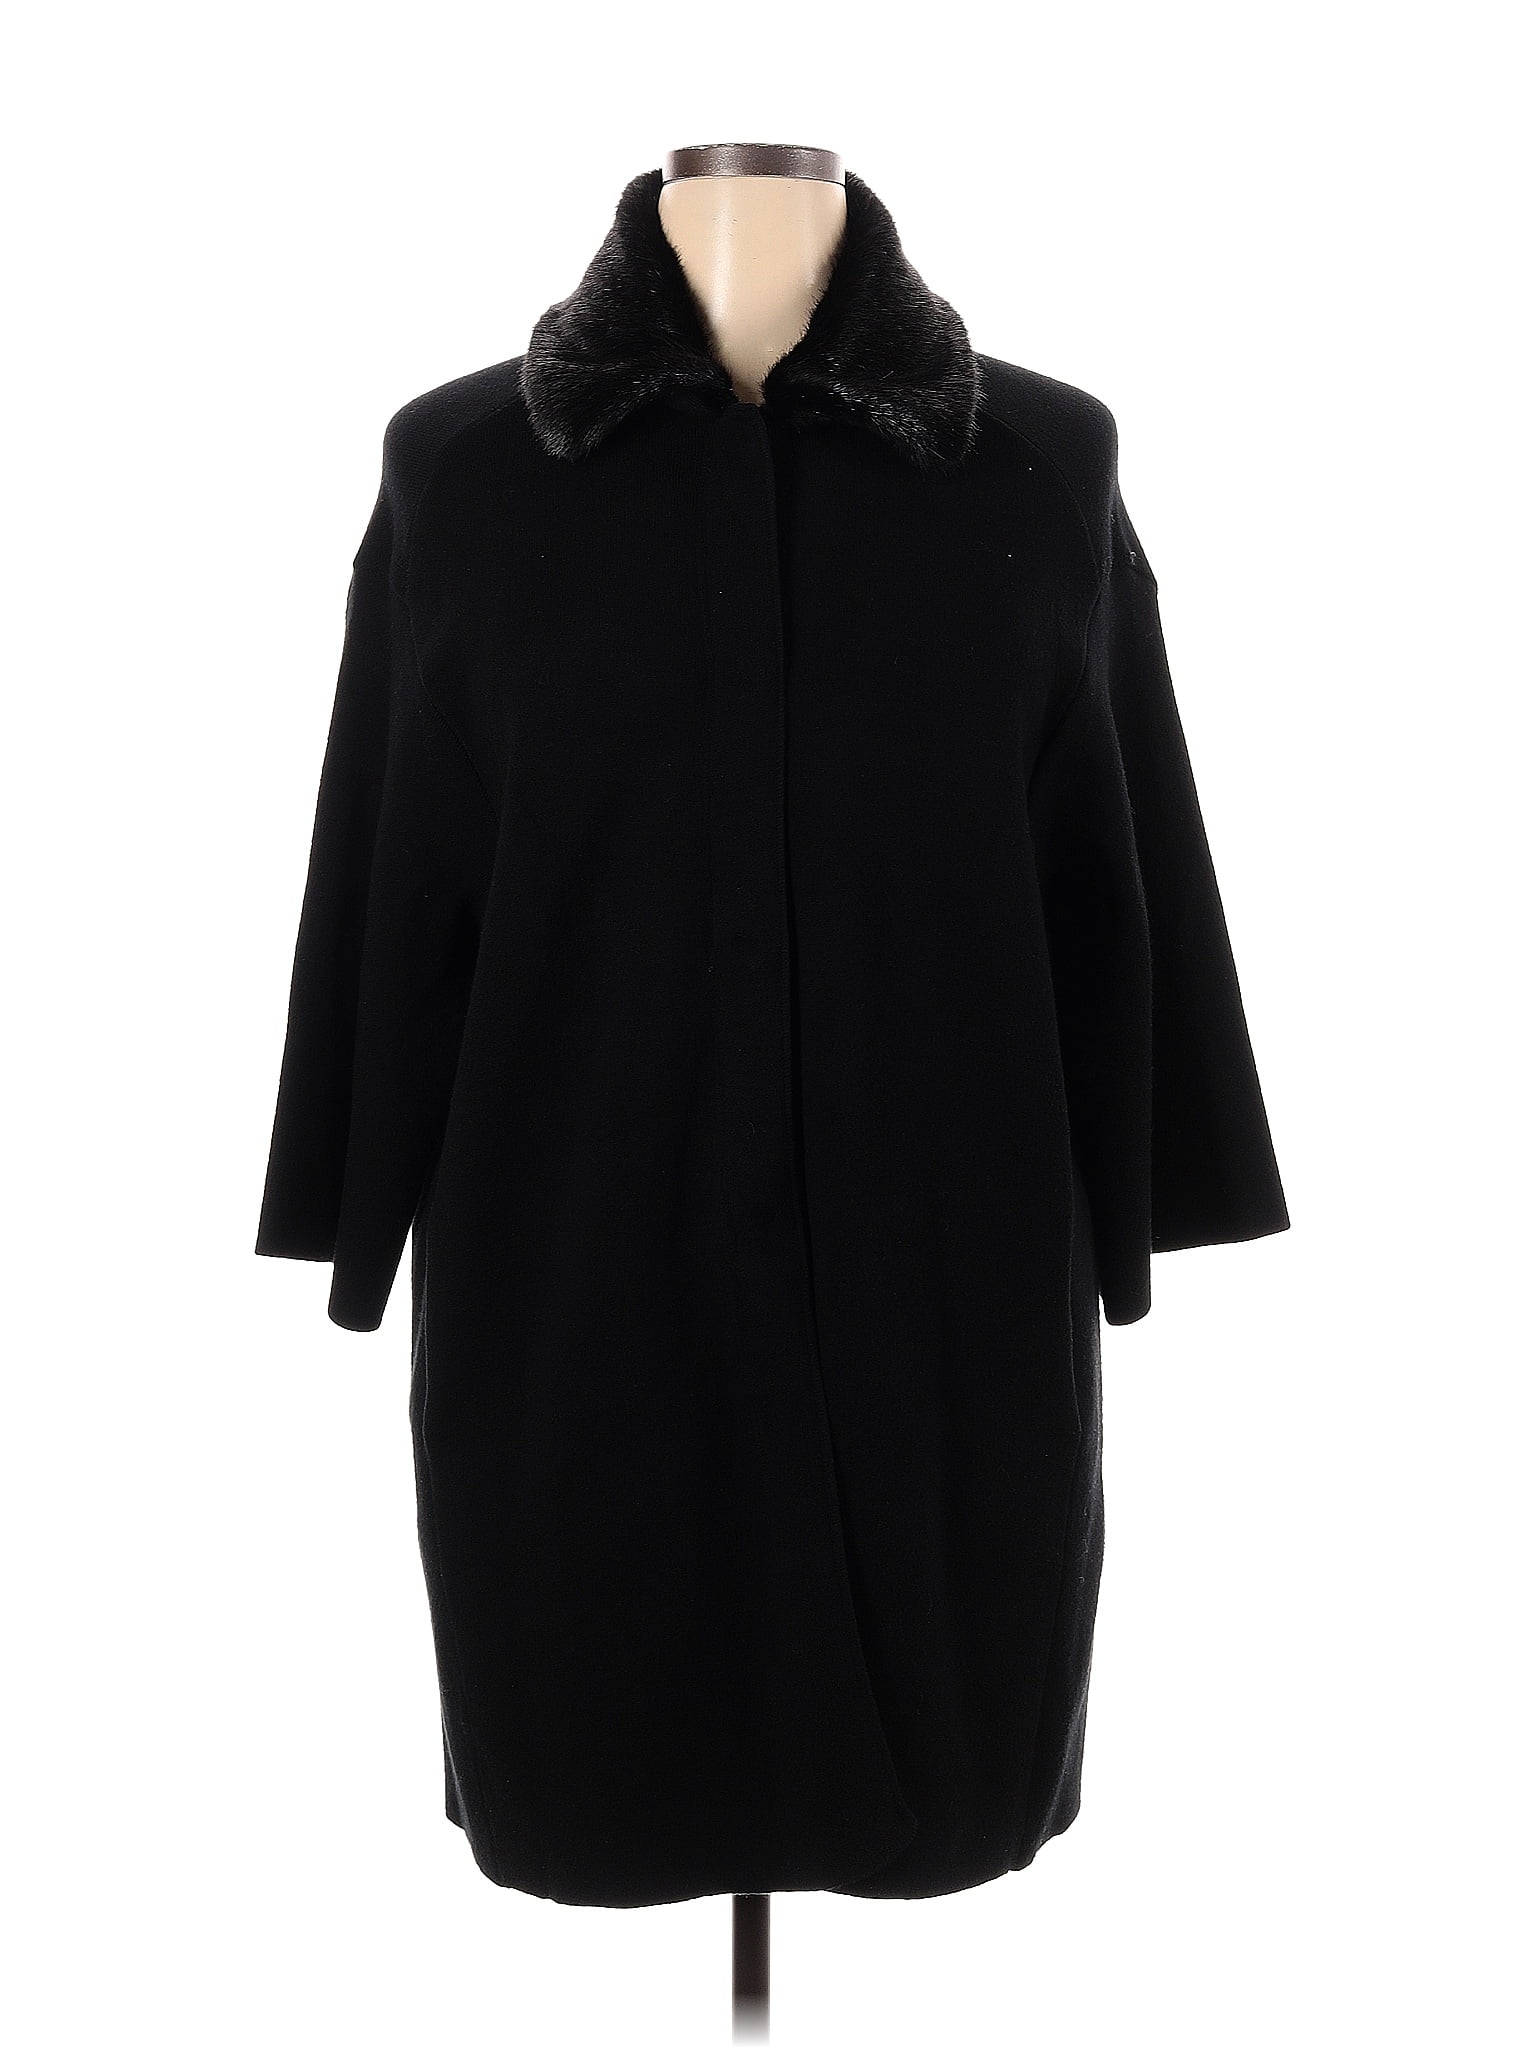 CATHERINE Catherine Malandrino Solid Black Coat Size XL - 76% off | thredUP